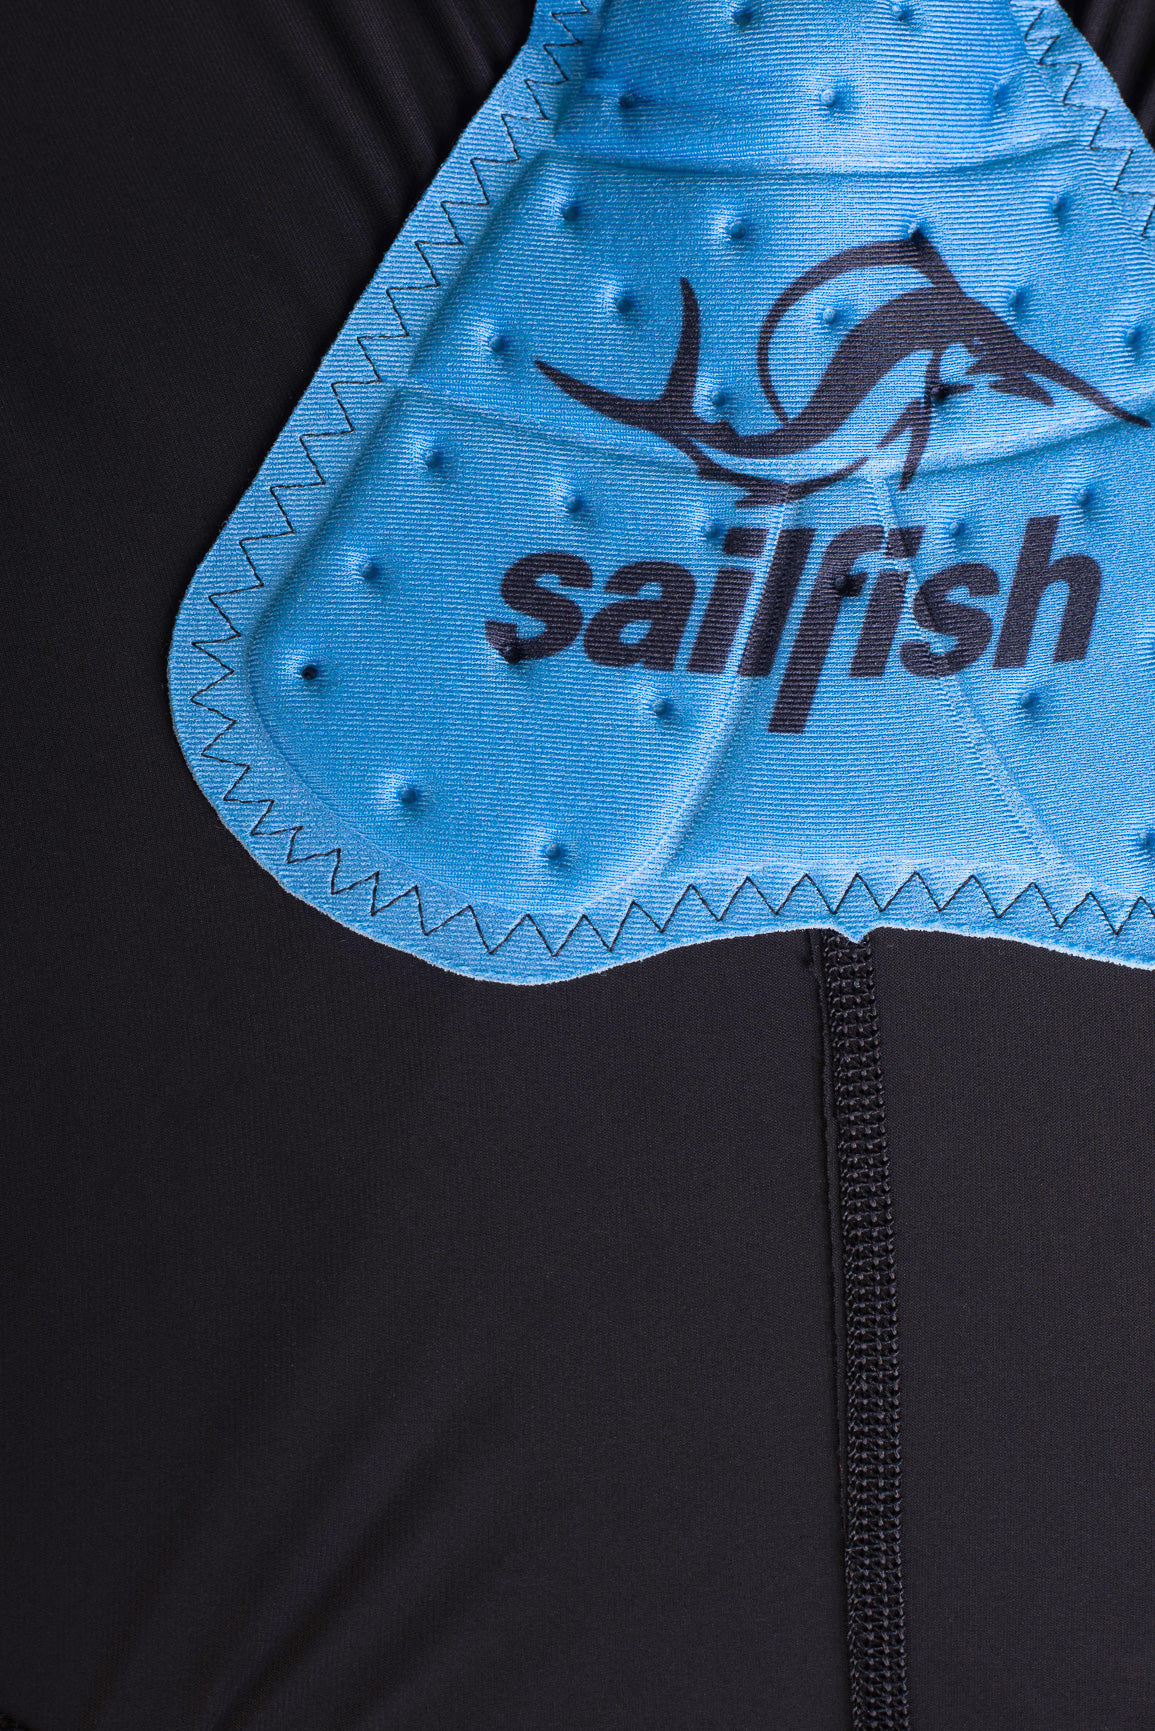 sailfish Mens Aerosuit Perform